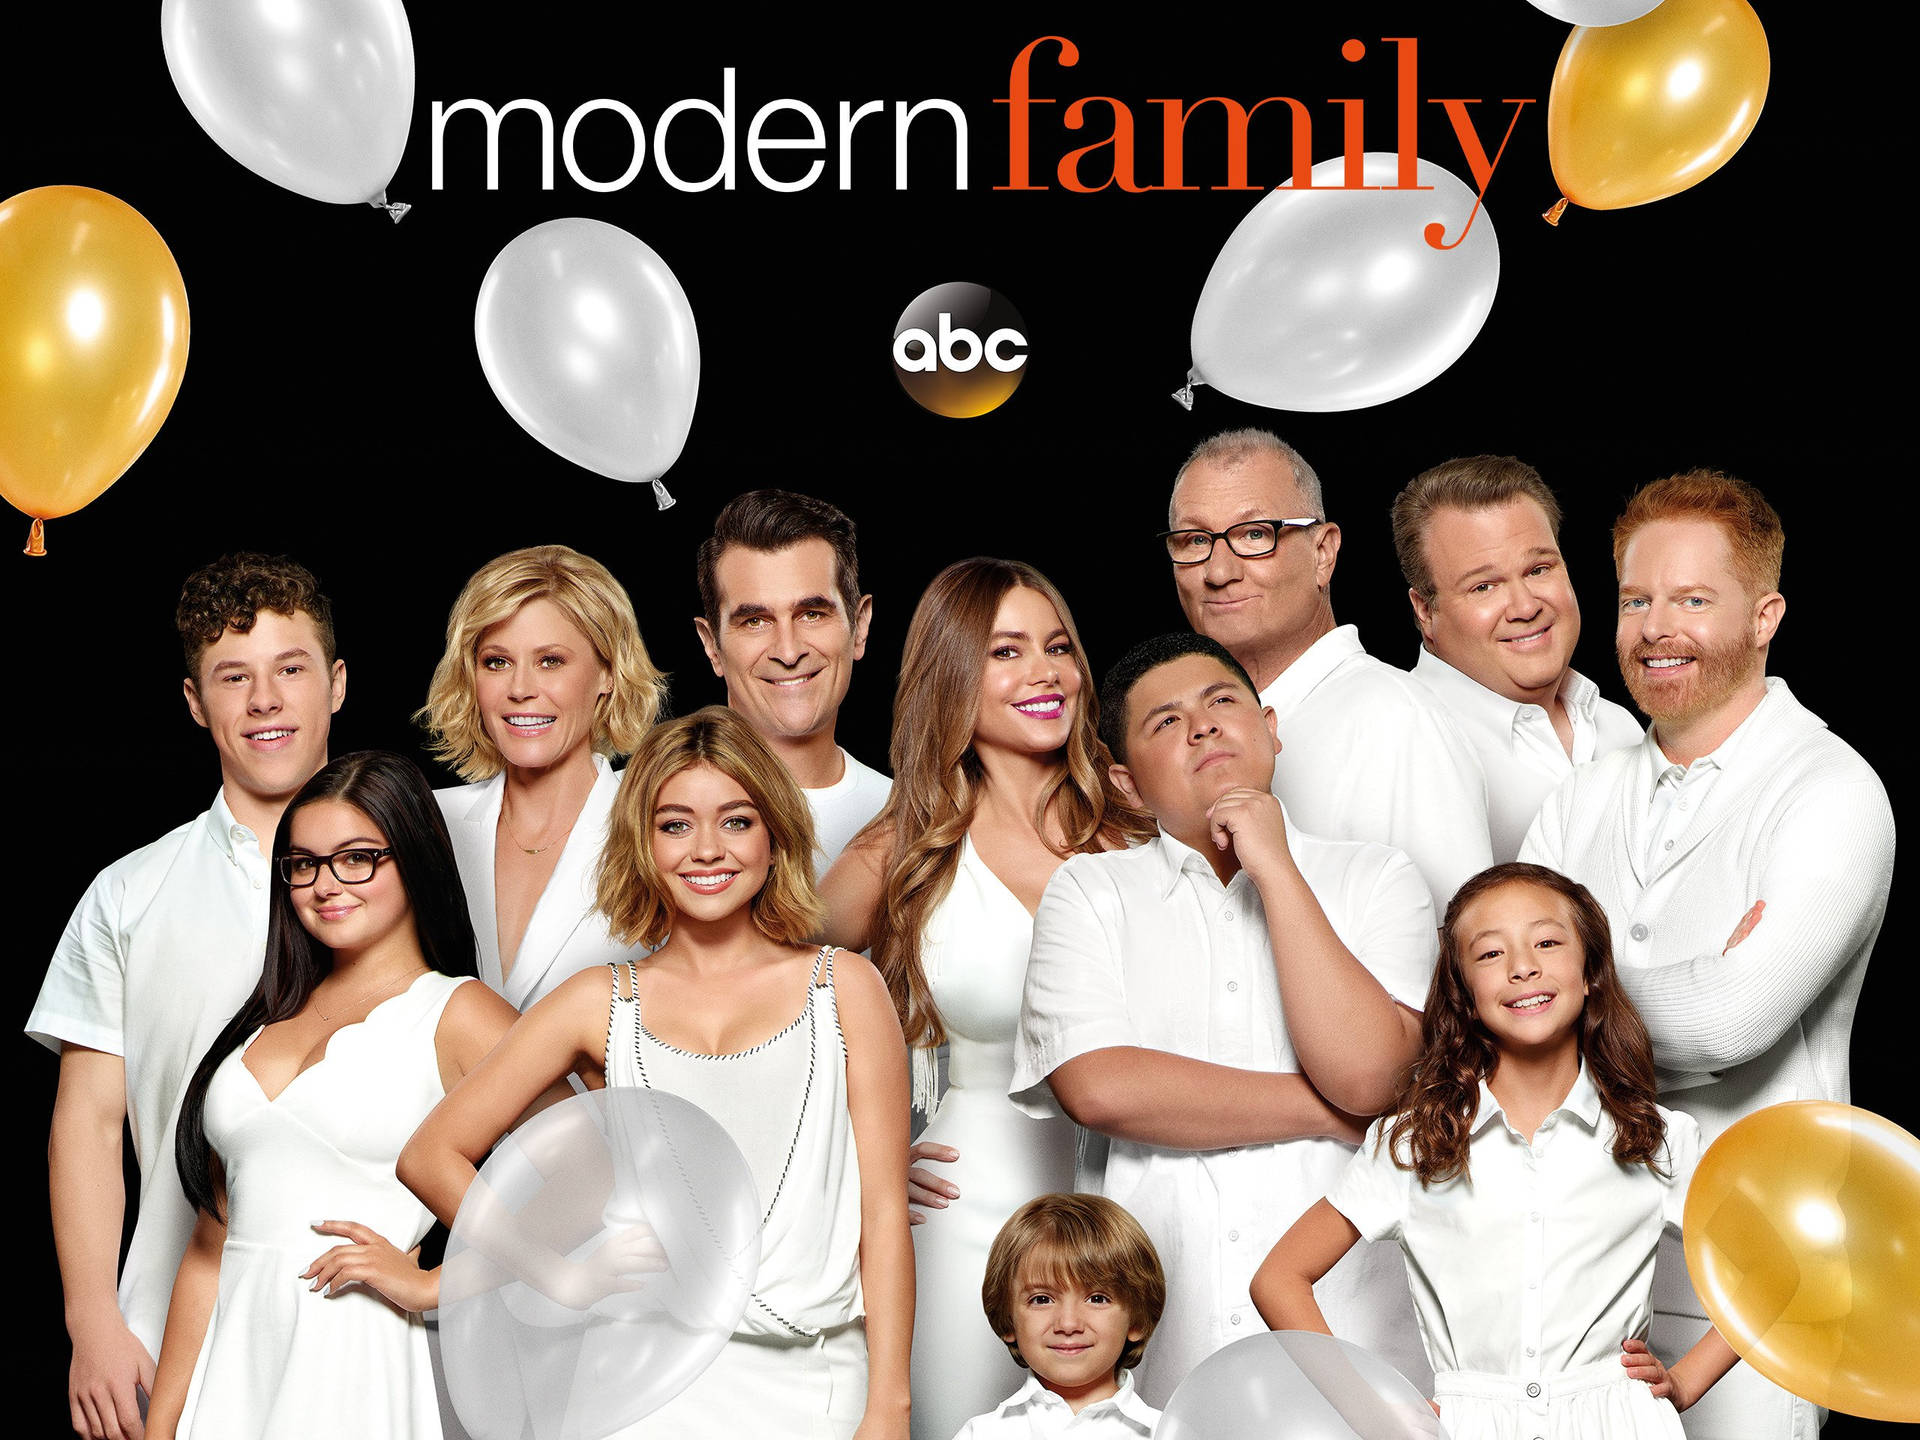 Celebrating Their 10th Season, The Modern Family Cast Reunites!